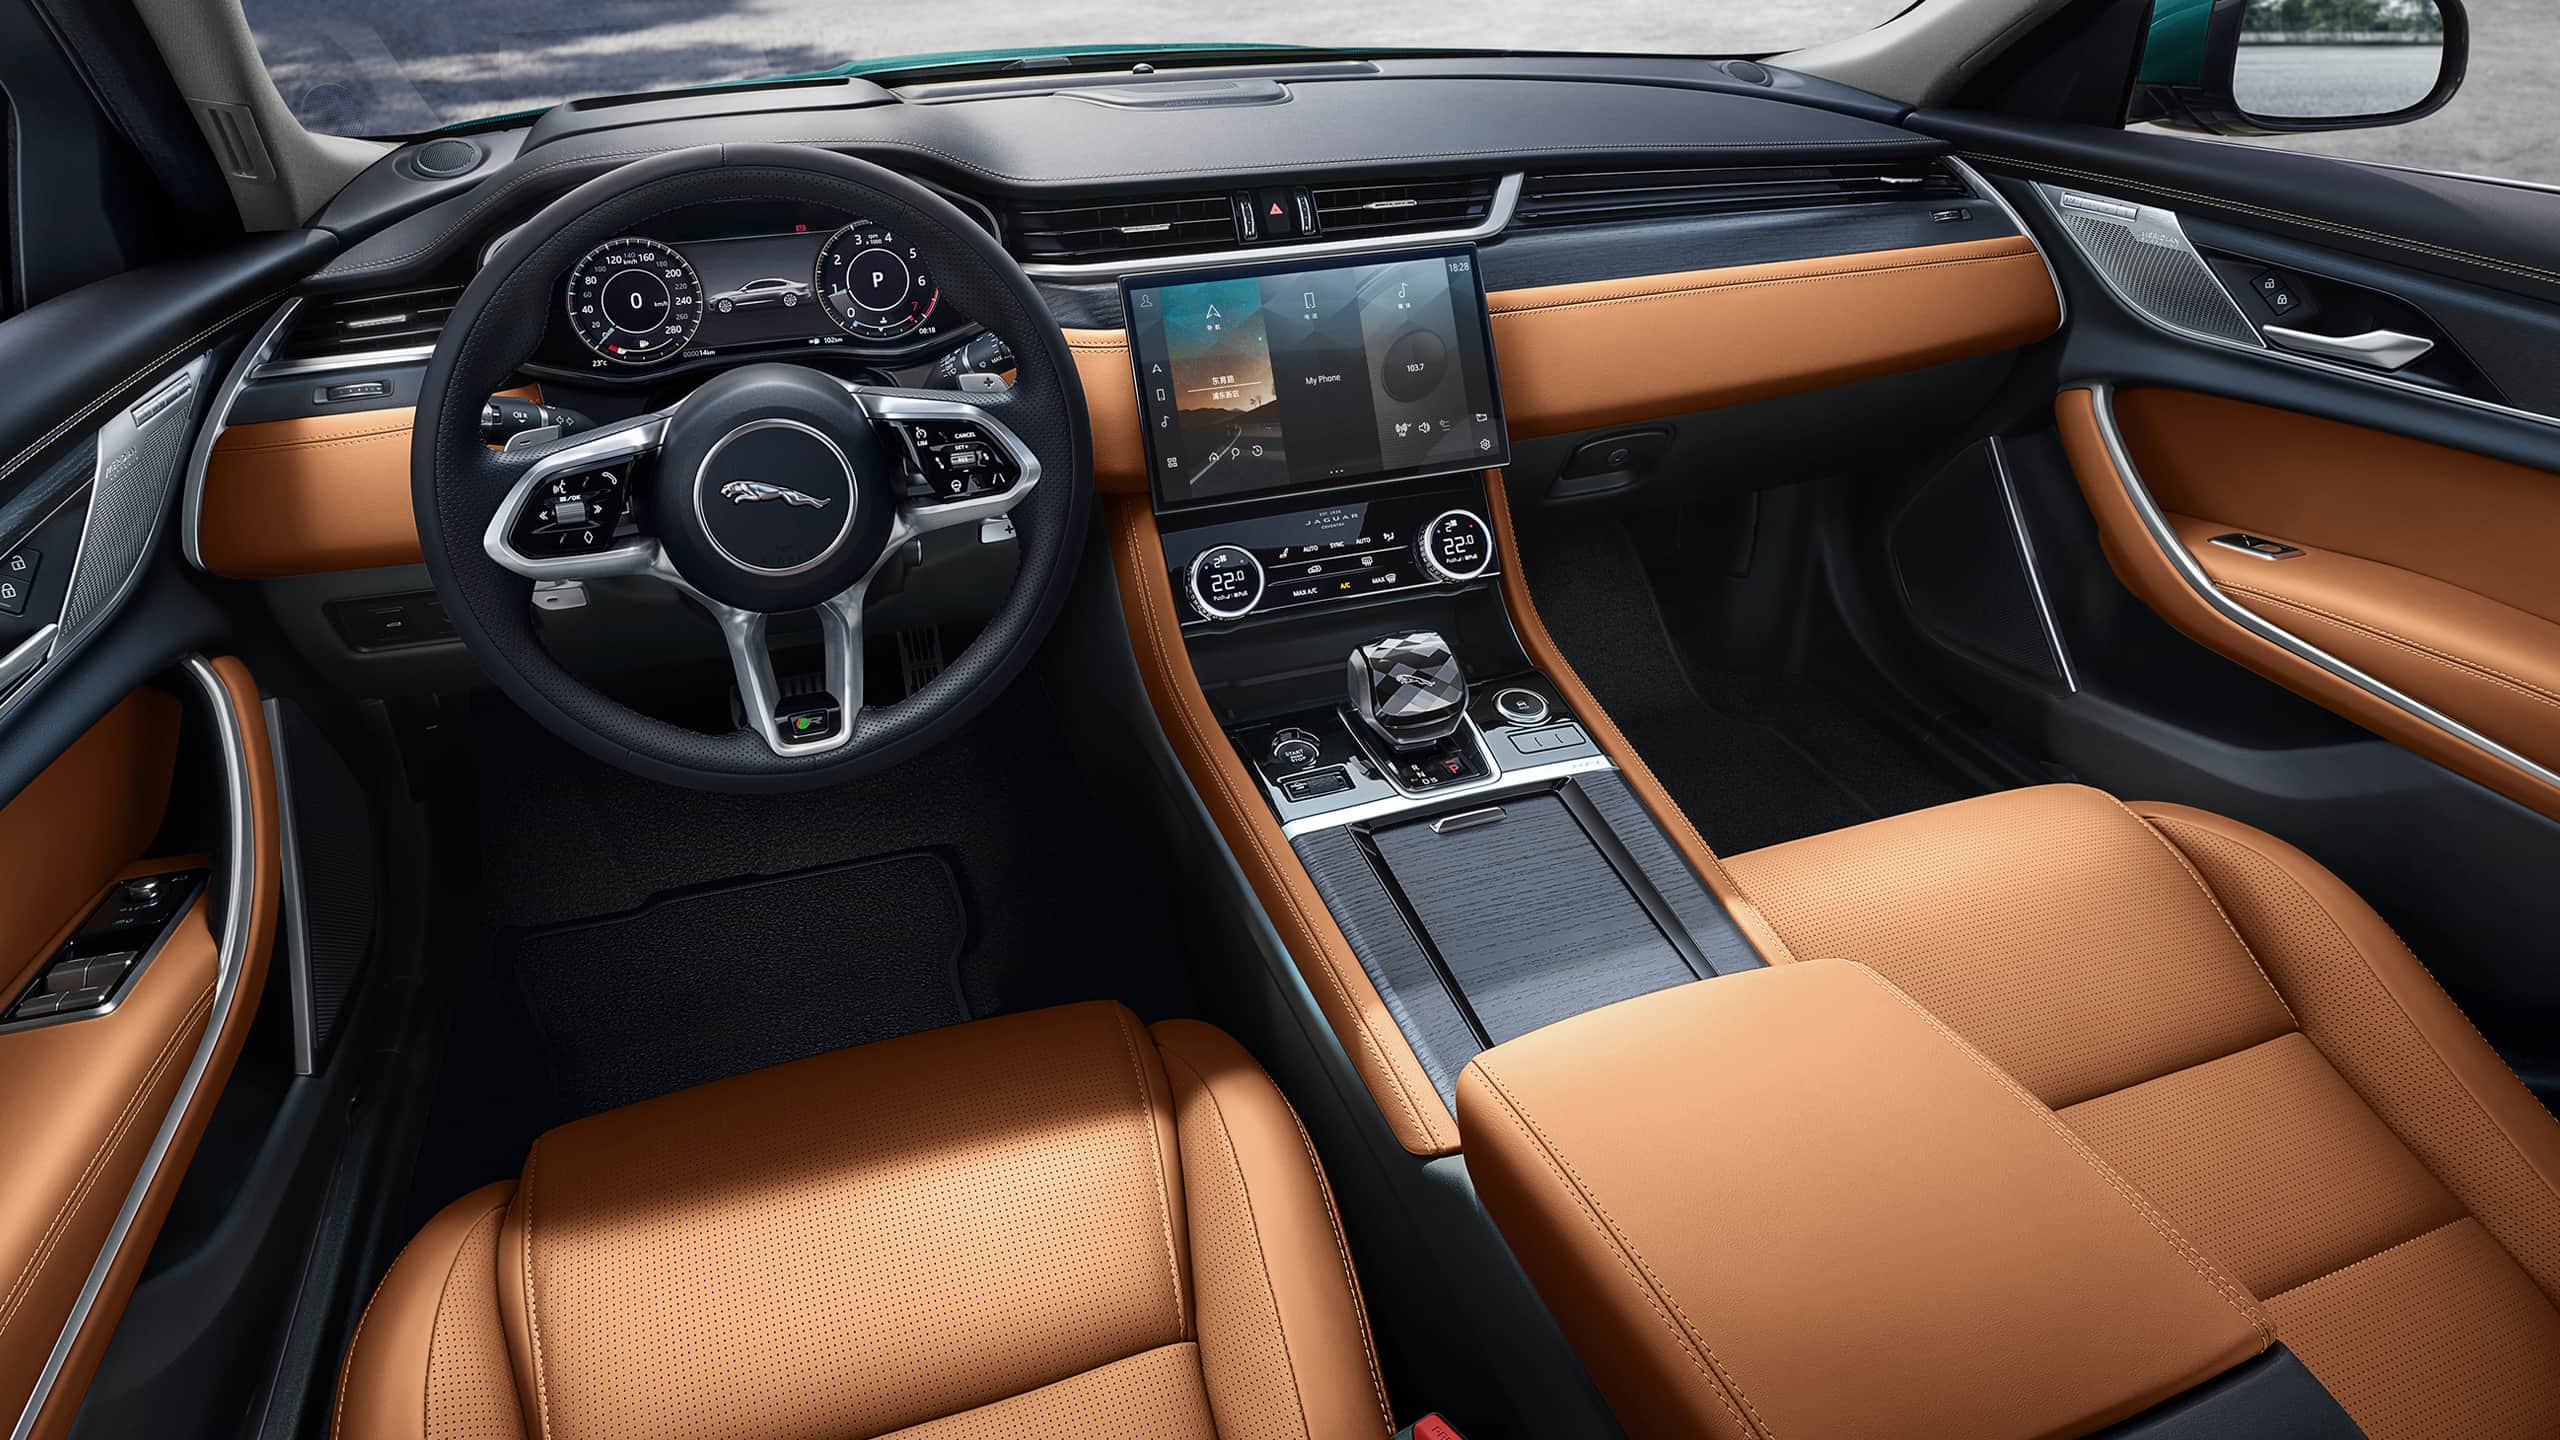 Jaguar XF luxurious interior view